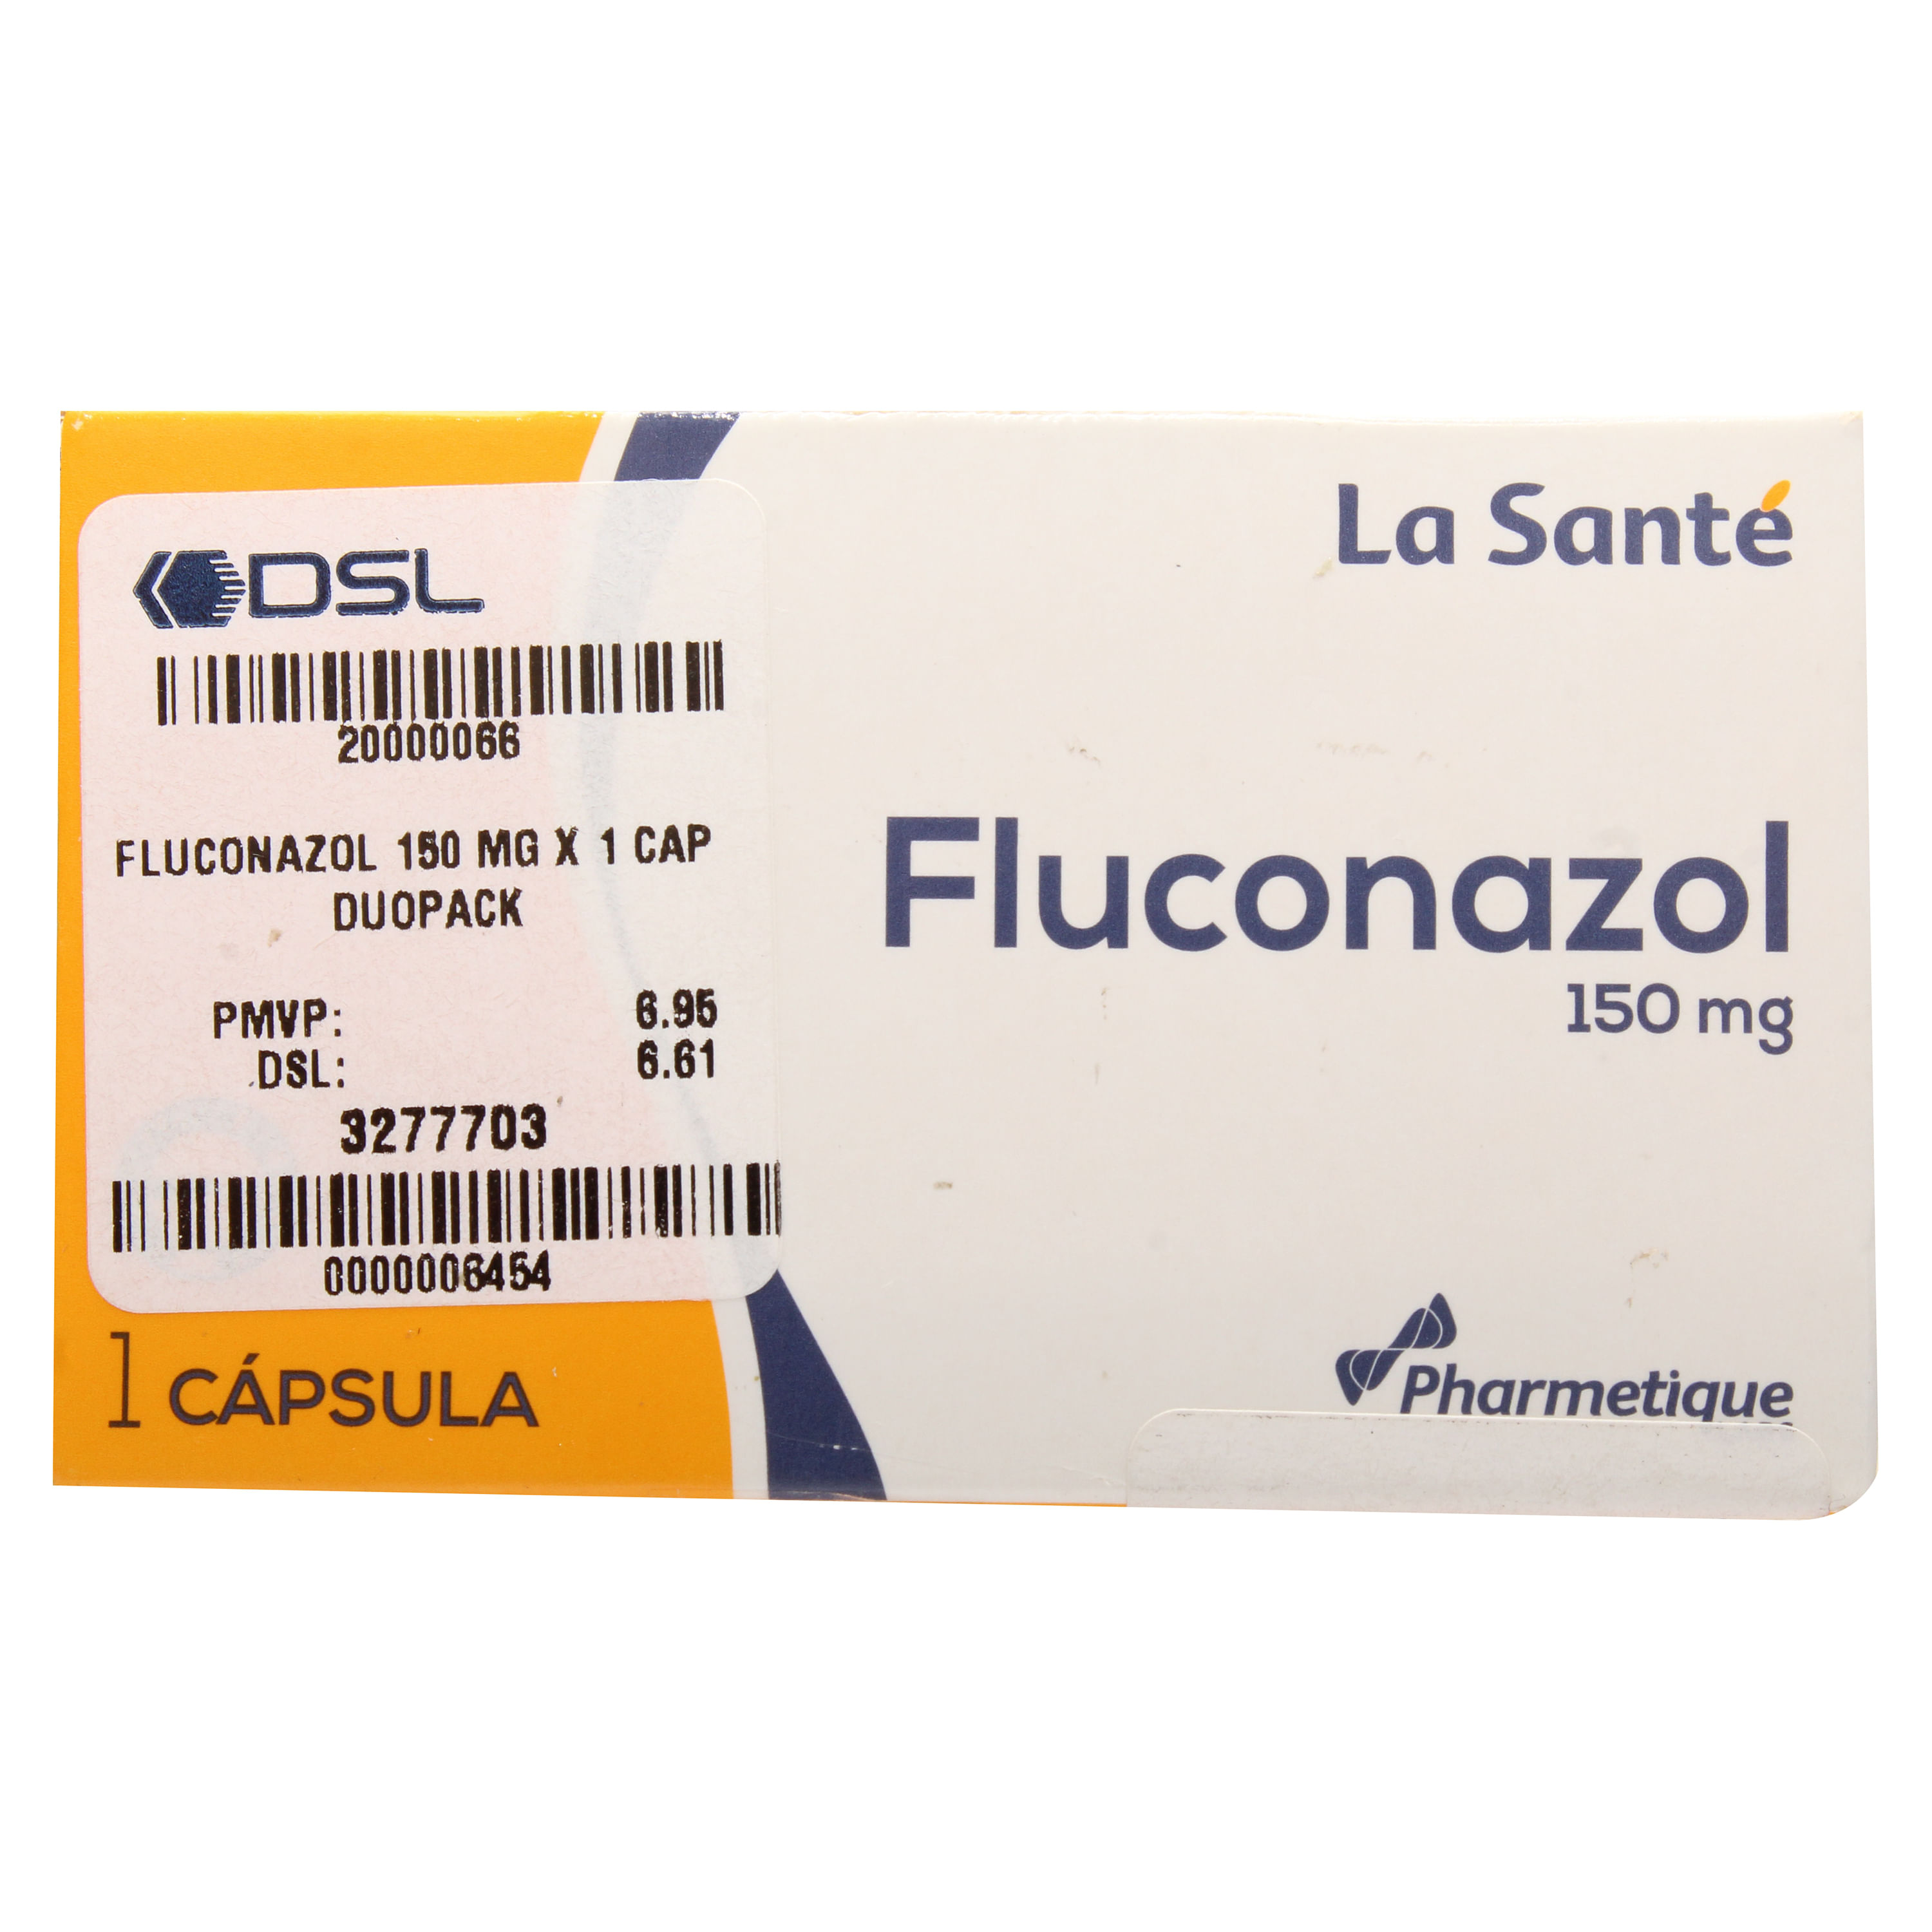 Comprar Fluconazol Sante 150 Mg 2Pack | Walmart El Salvador